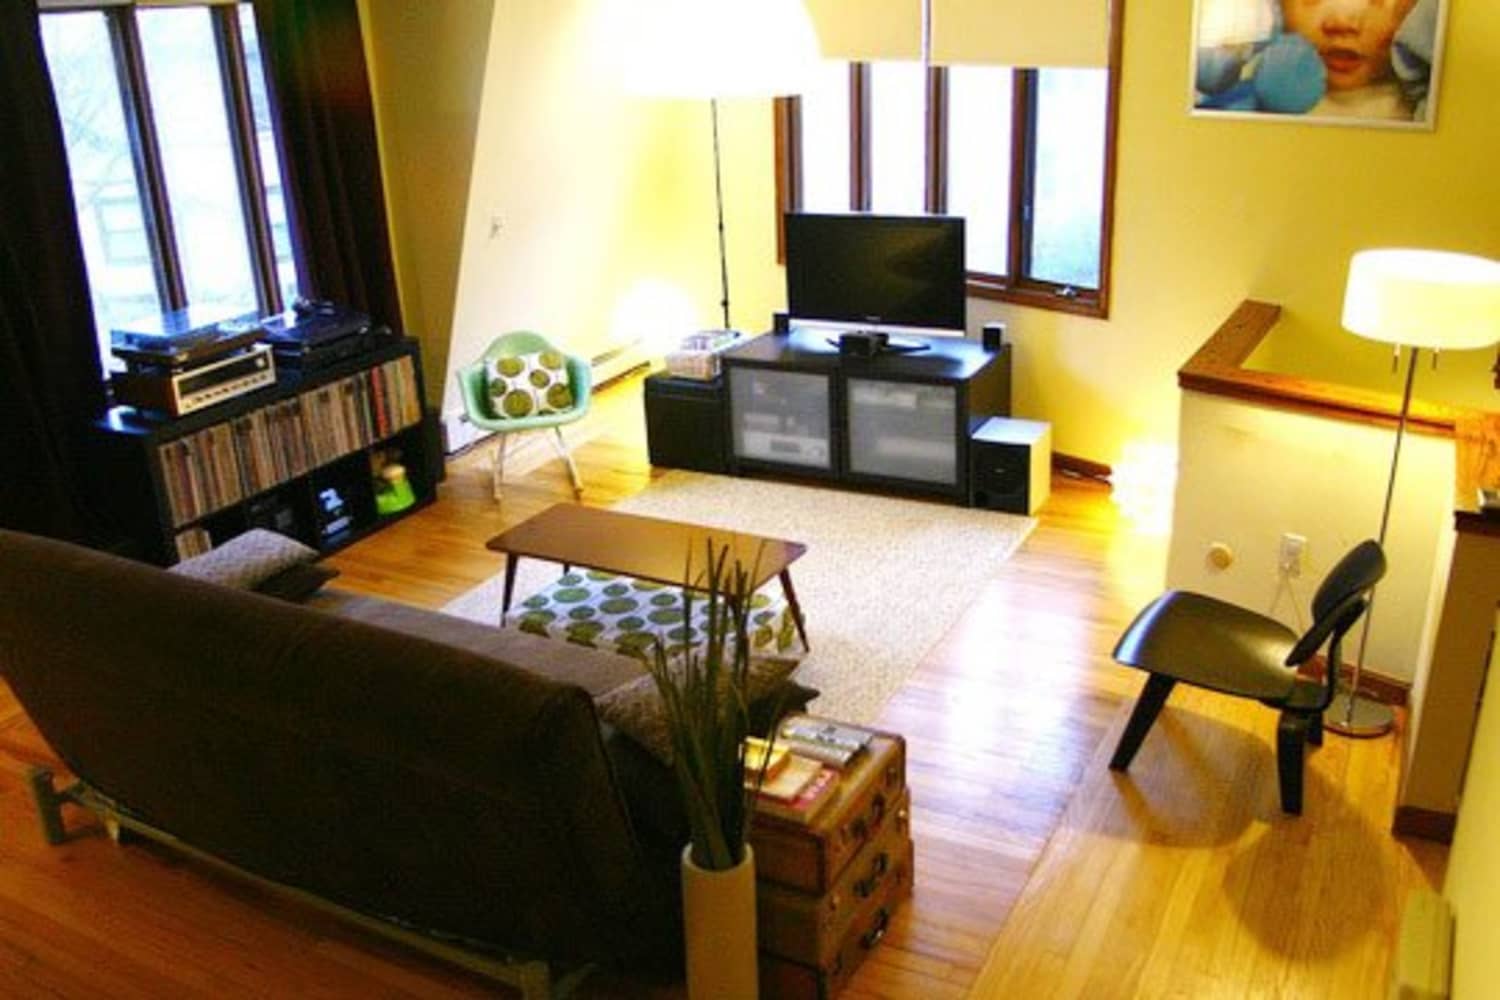 5 Ideas For Dividing Up A Small Living Room | Apartment ...